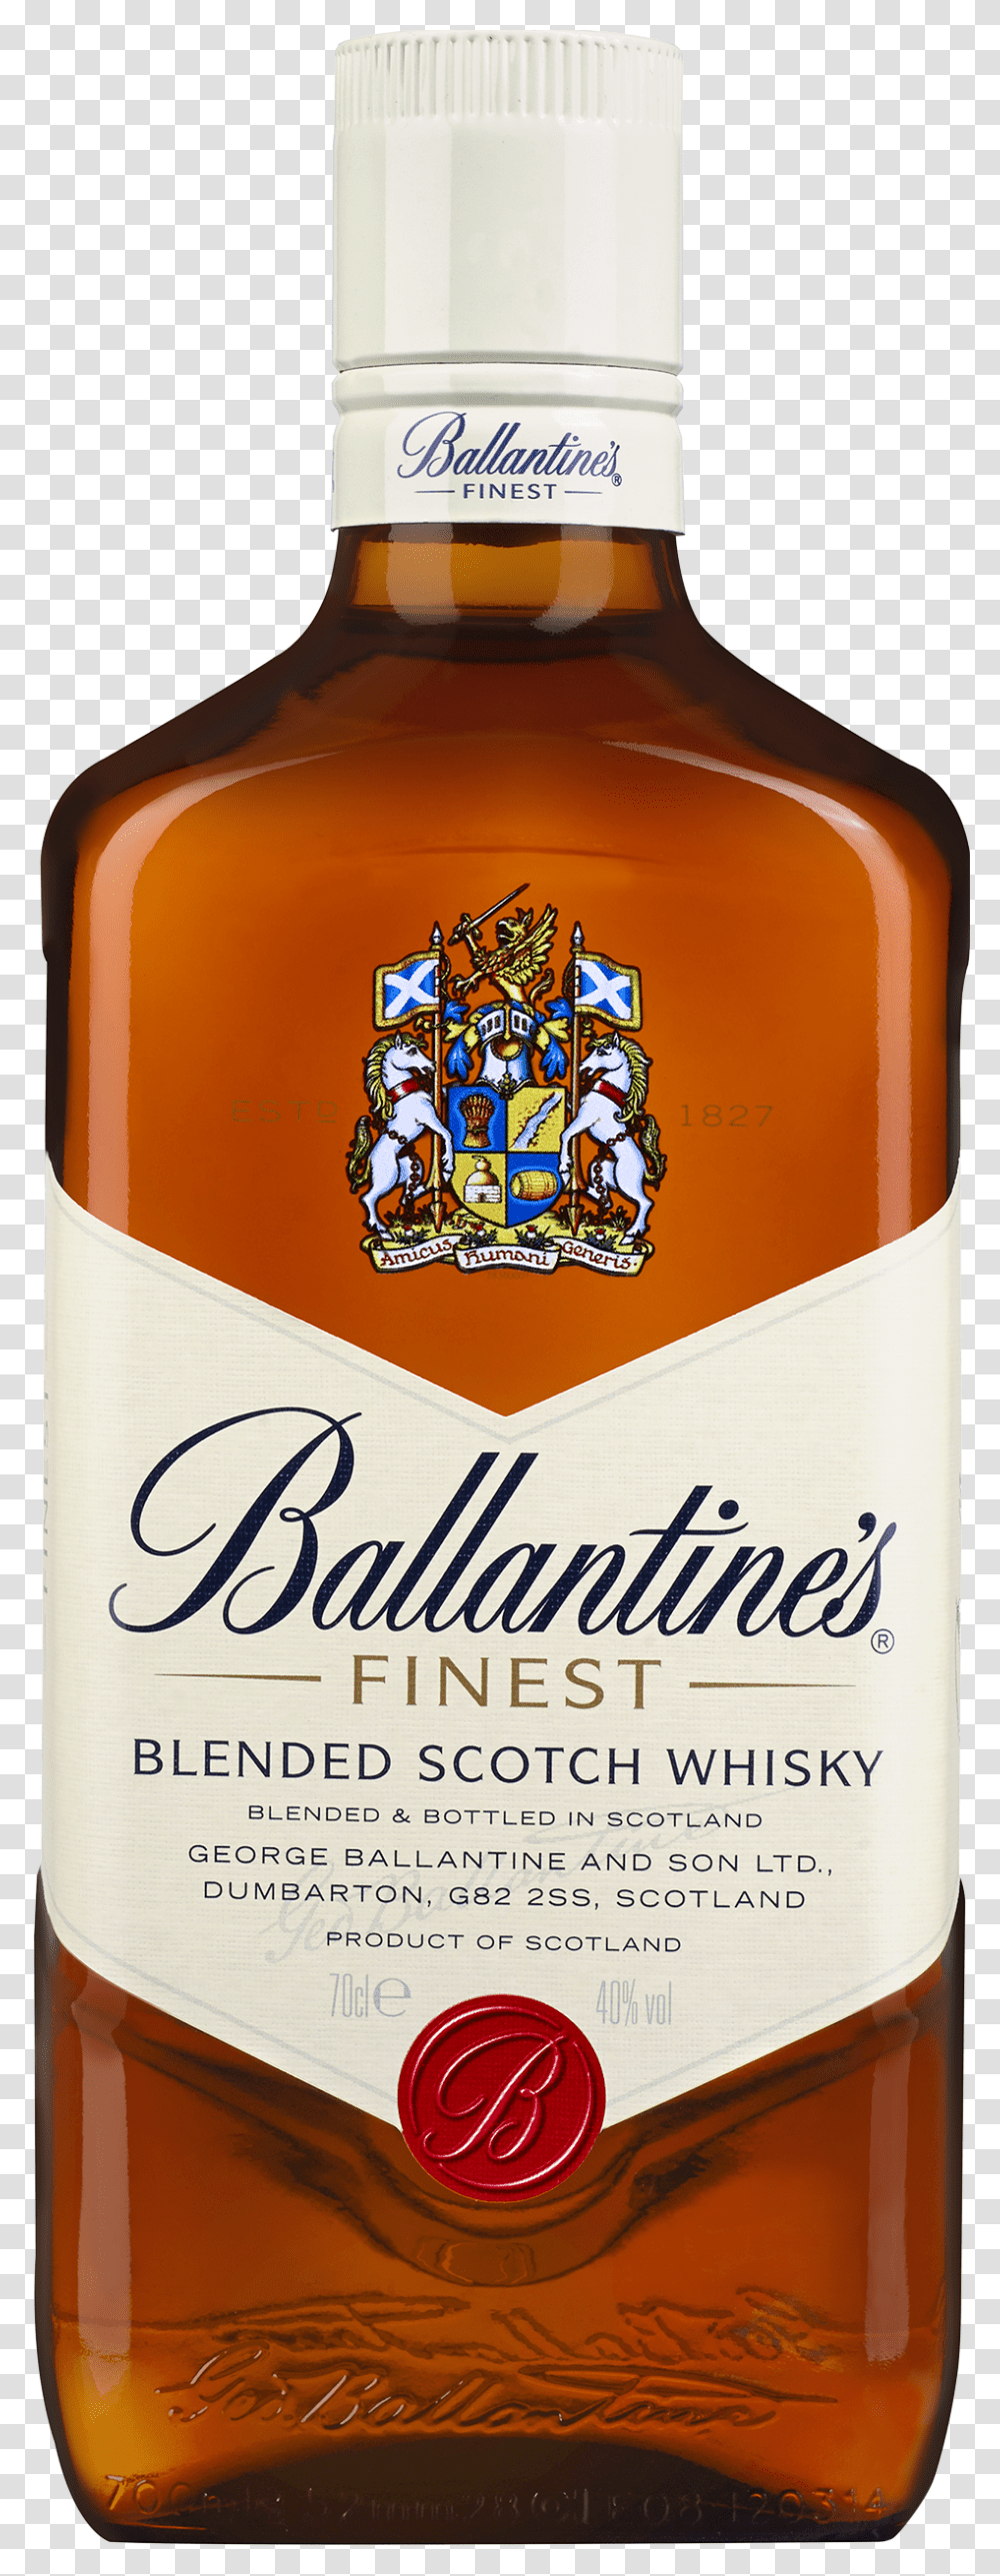 Ballantines Whisky, Liquor, Alcohol, Beverage, Drink Transparent Png